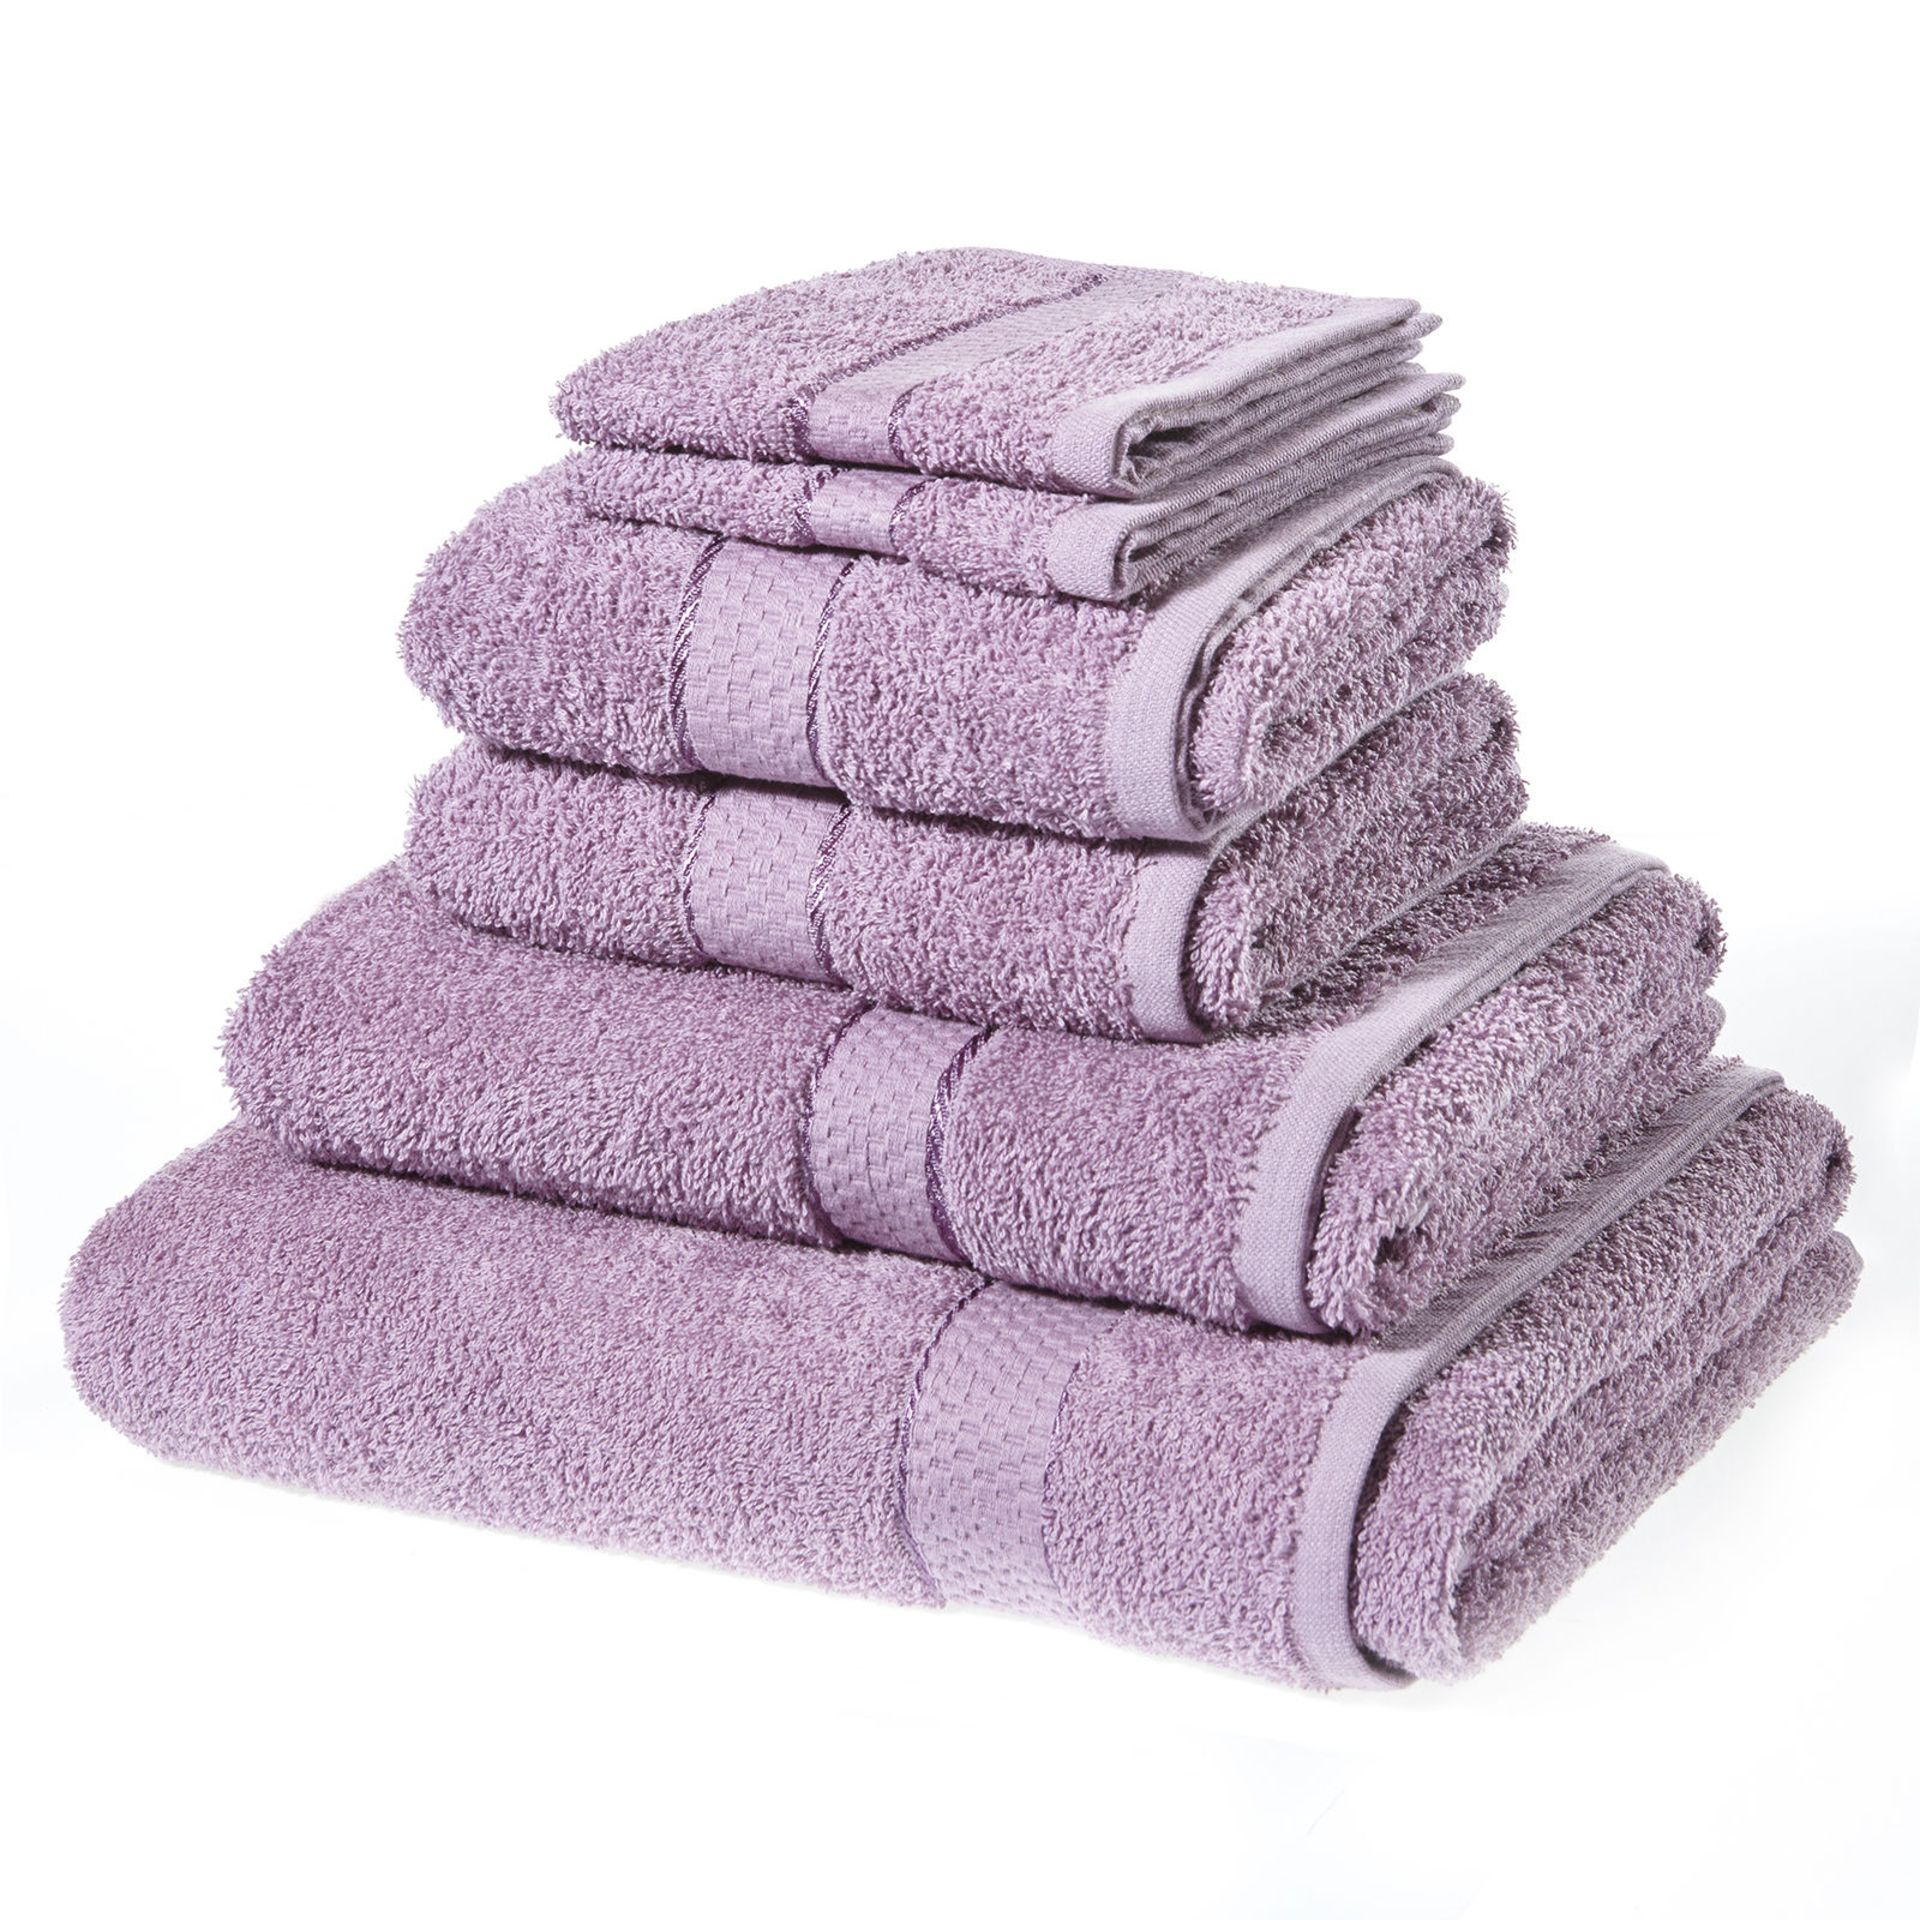 V Brand New Mauve 6 Piece Towel Bale Set With 2 Face Towels - 2 Hand Towels - 1 Bath Sheet - 1